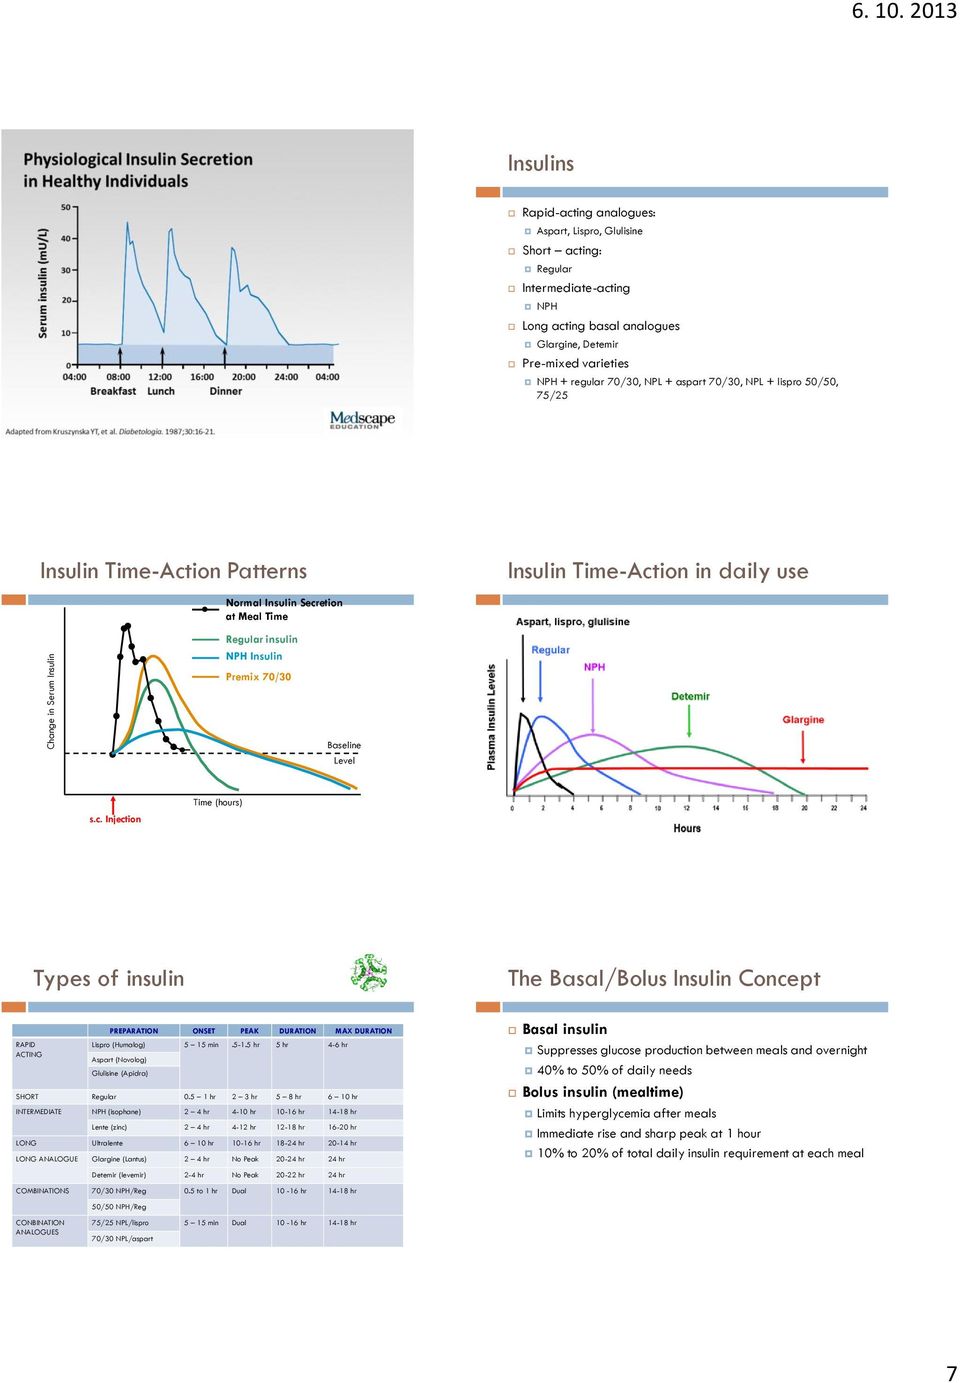 NPL + aspart 70/30, NPL + lispro 50/50, 75/25 Insulin Time-Action Patterns Insulin Time-Action in daily use Normal Insulin Secretion at Meal Time Regular insulin NPH Insulin Premix 70/30 Baseline